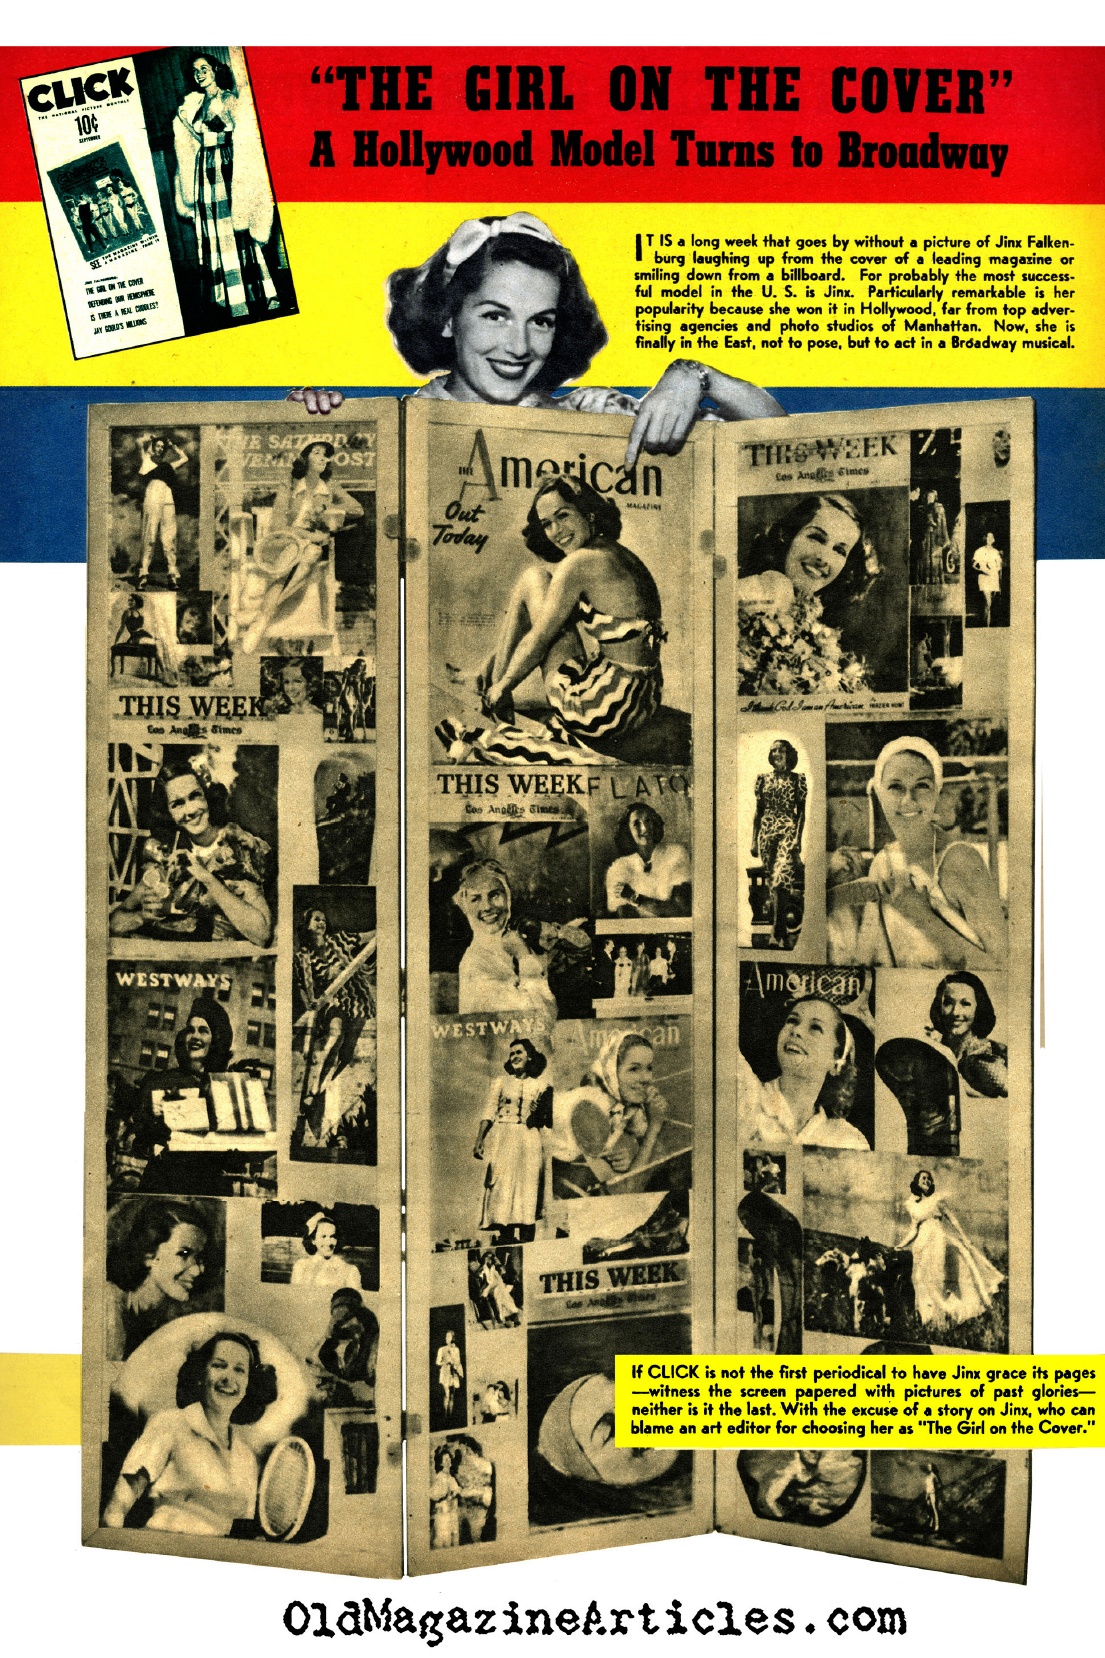 Top Model Jinks Falkenburg (Click Magazine, 1940)